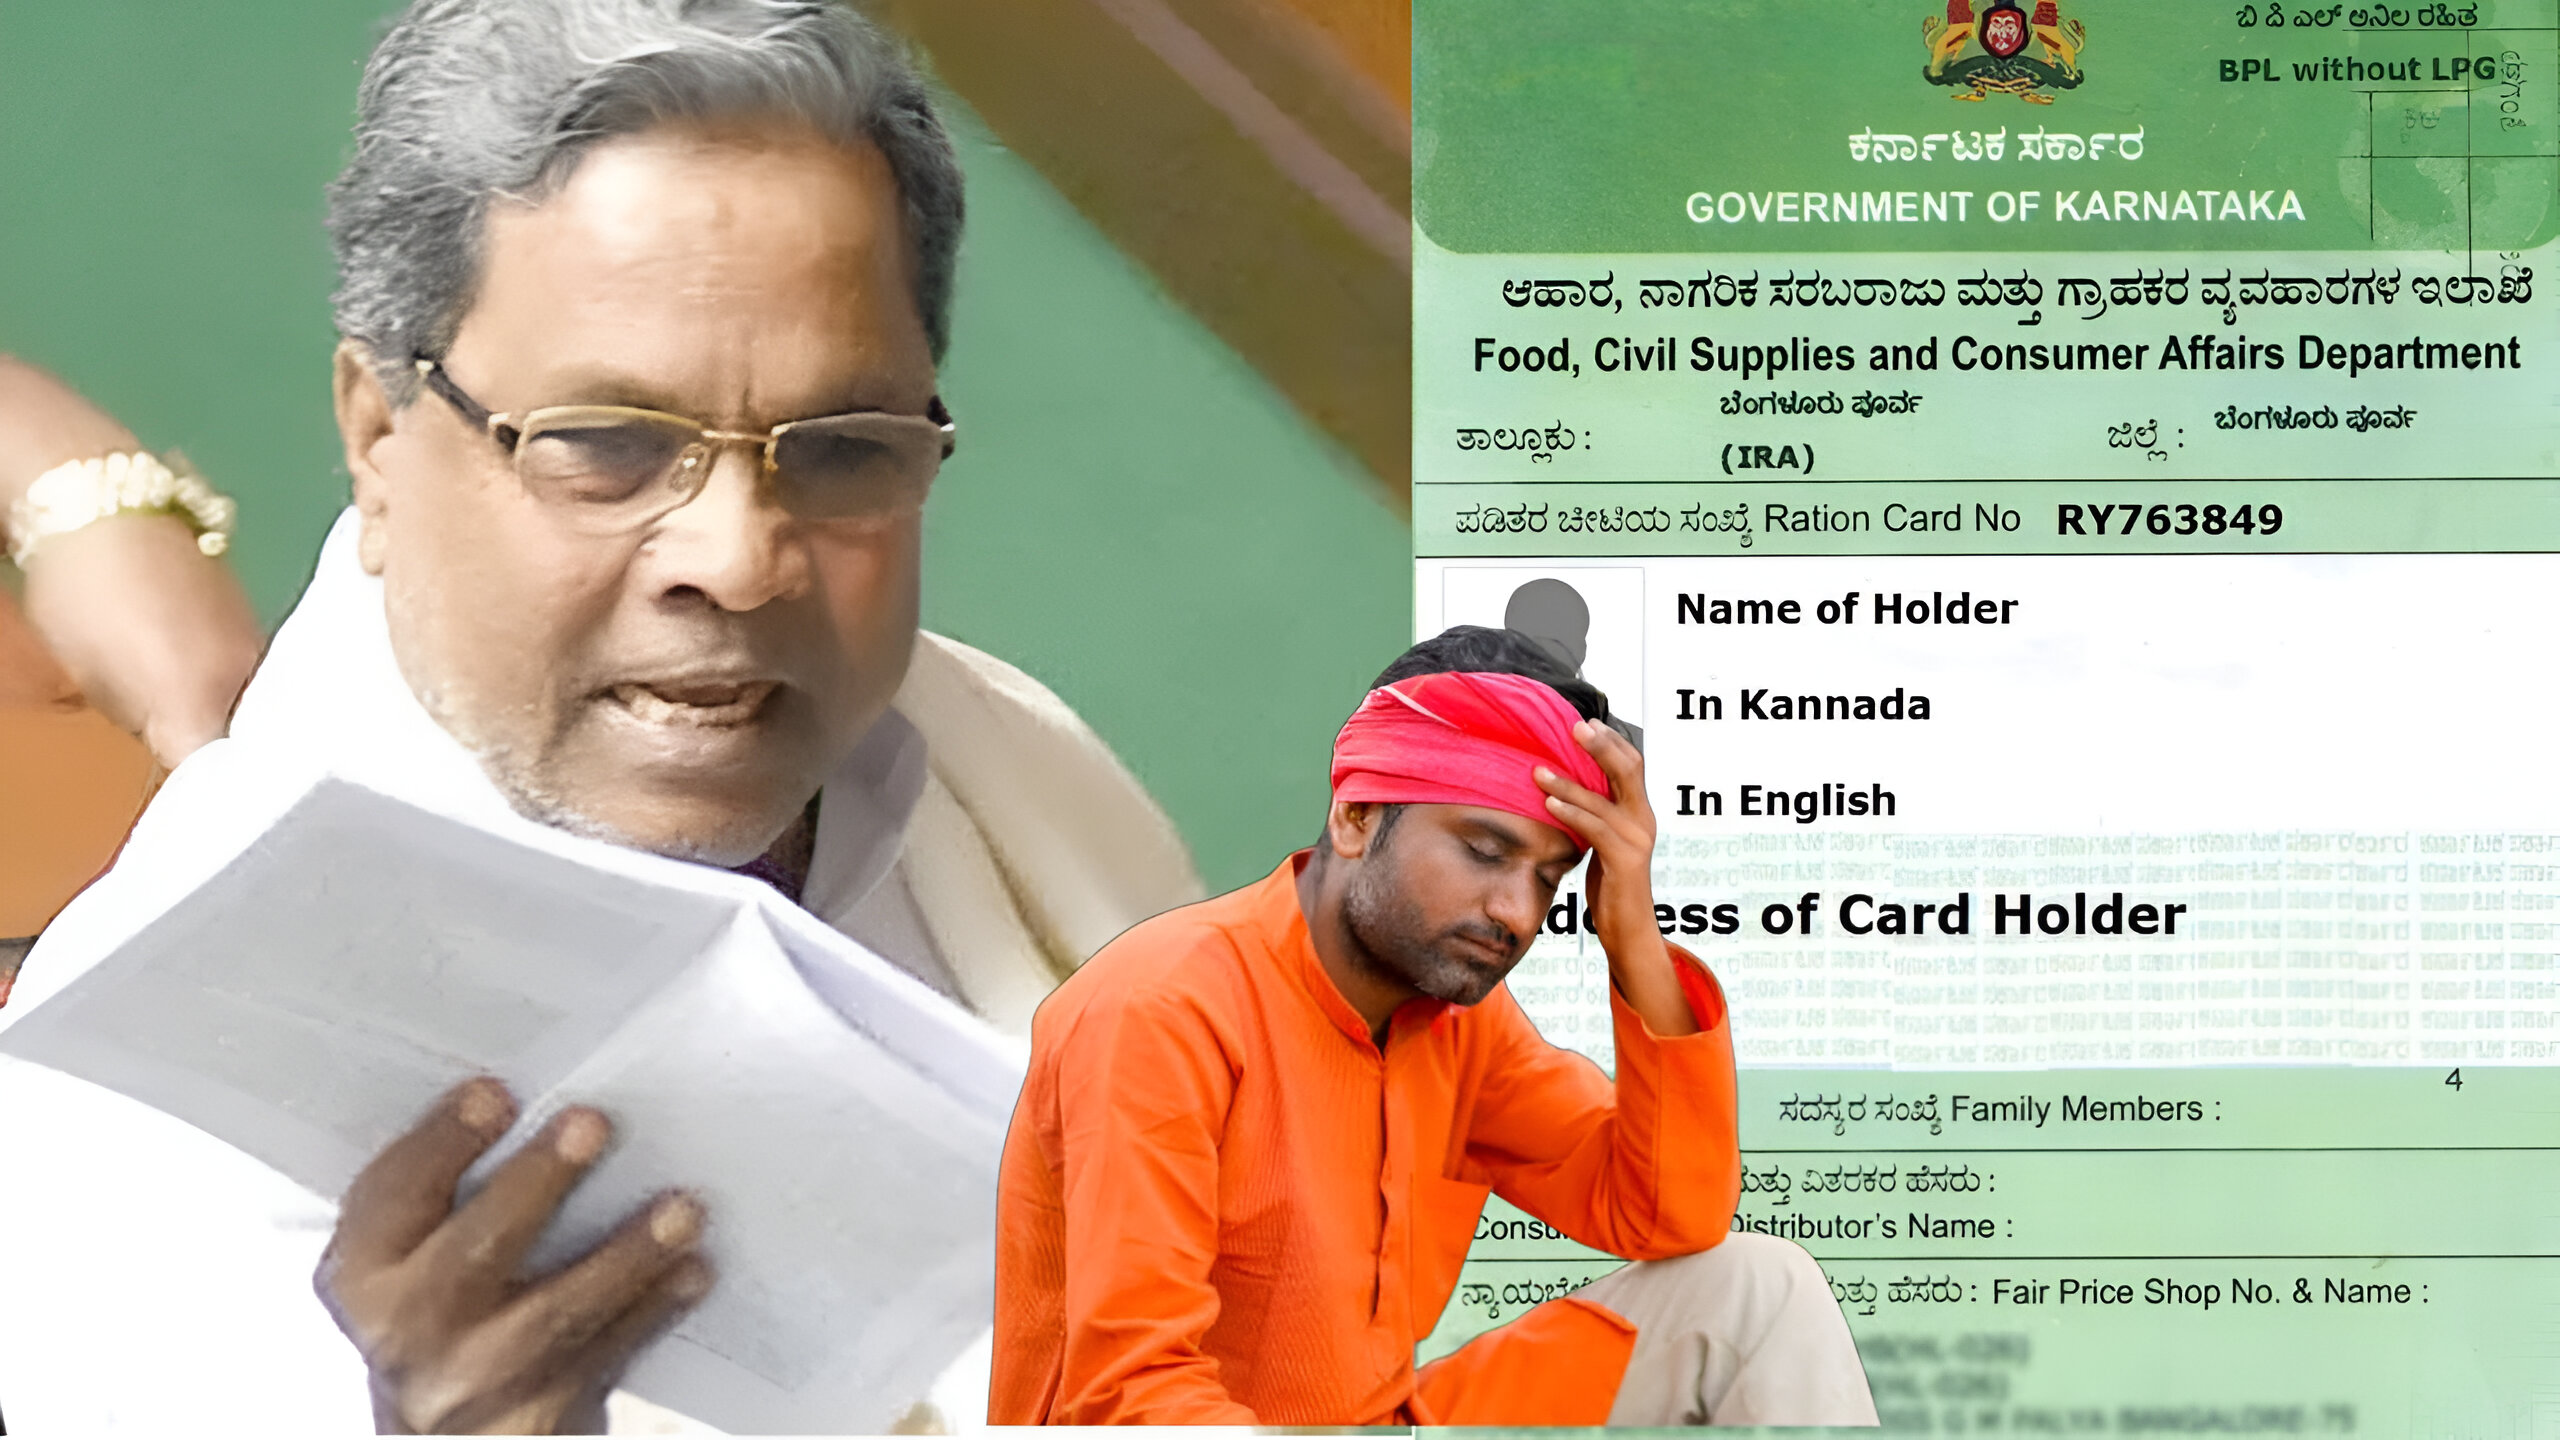 How can I cancel my ration card in Karnataka? How can I remove my name from ration card in Karnataka? What are the rules for ration card in Karnataka? How can I check my ration card status in Karnataka?